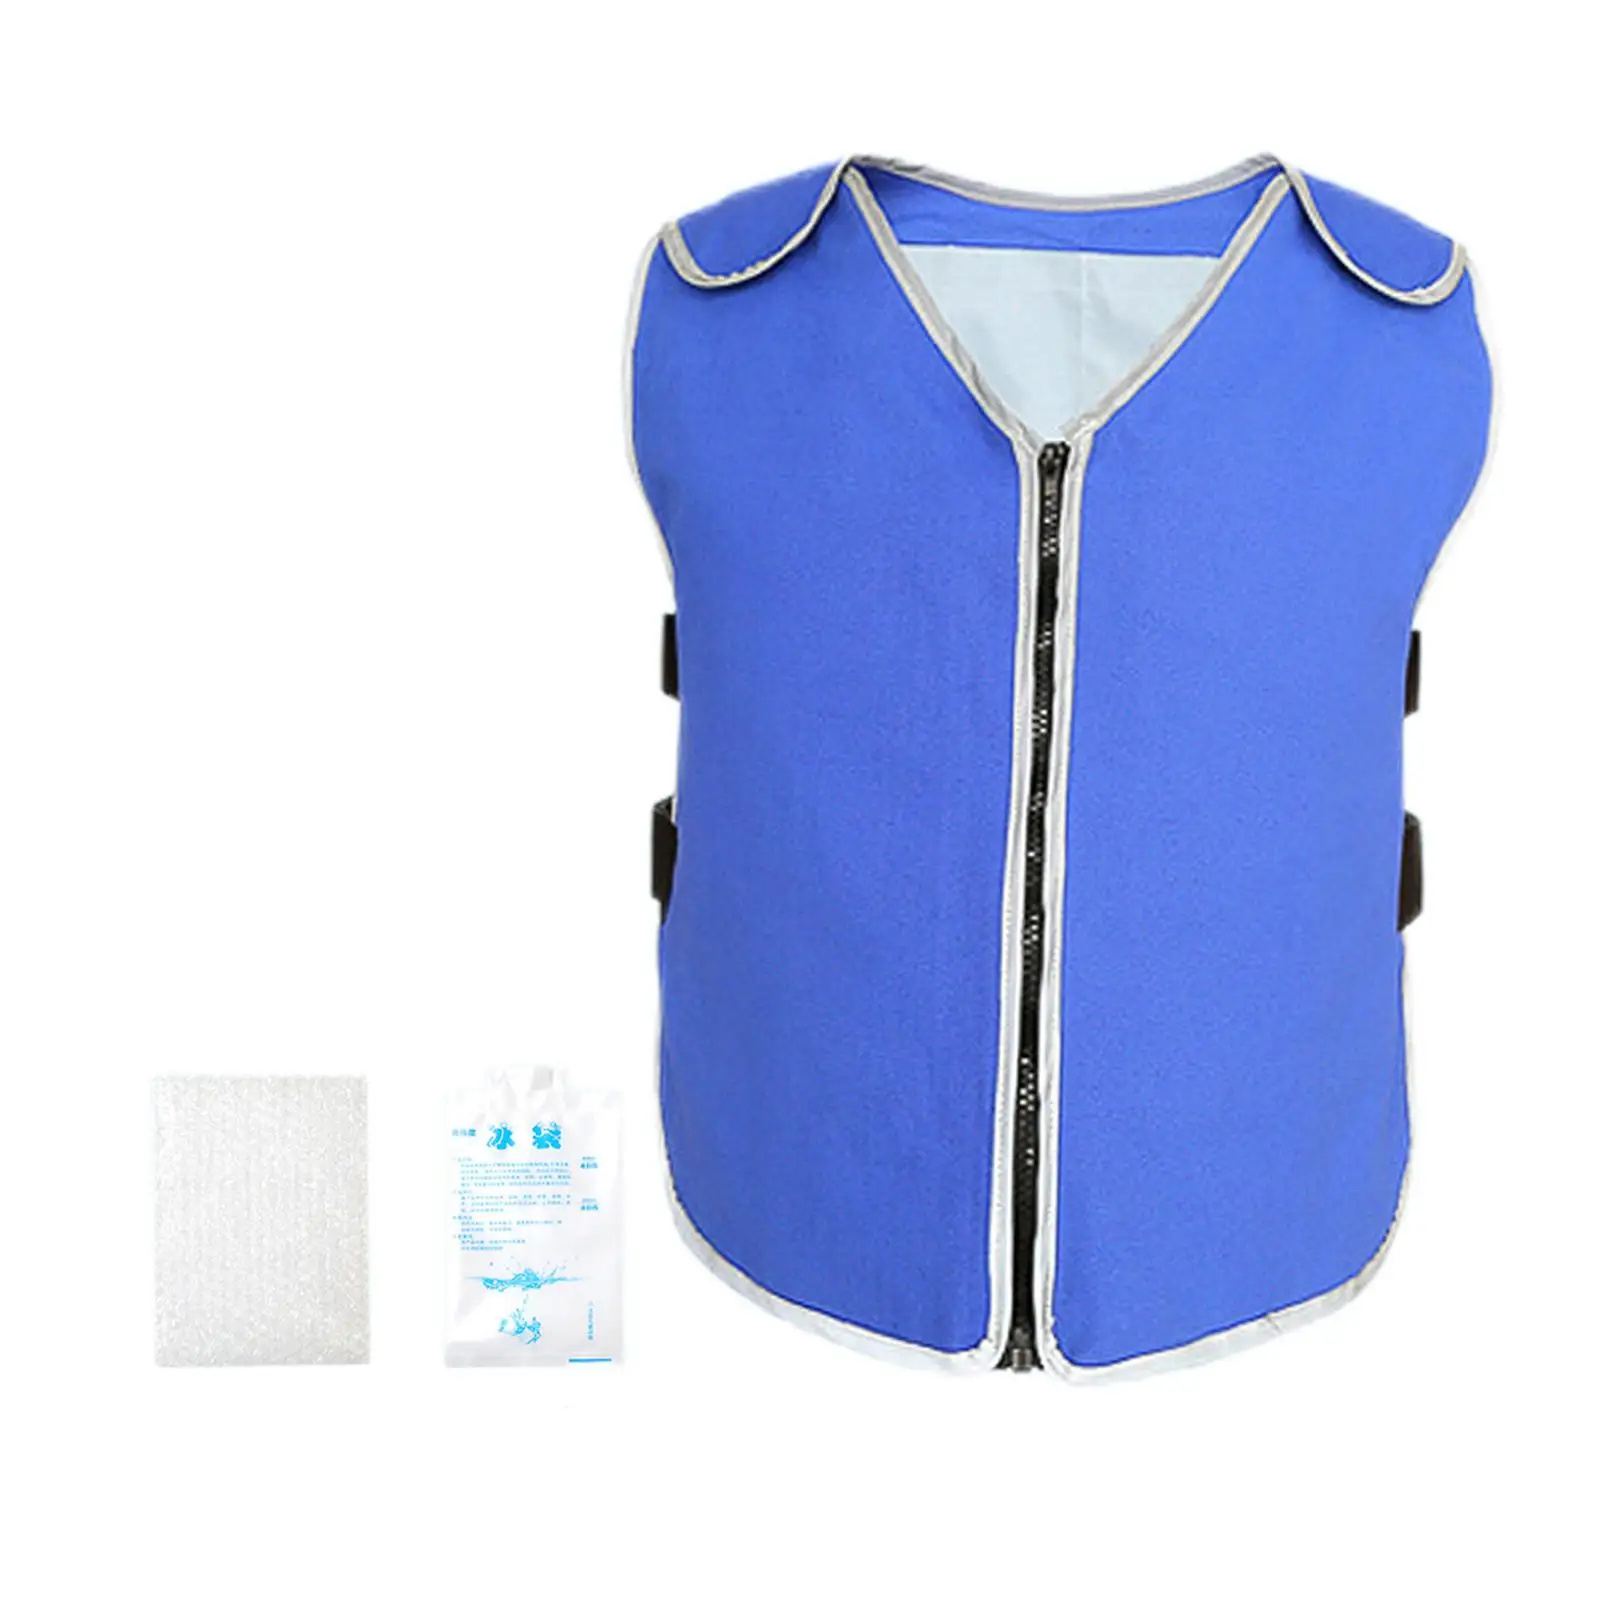 Reflective Cooling Vest Adjustable Zipper for Men Women Summer Hot Weather